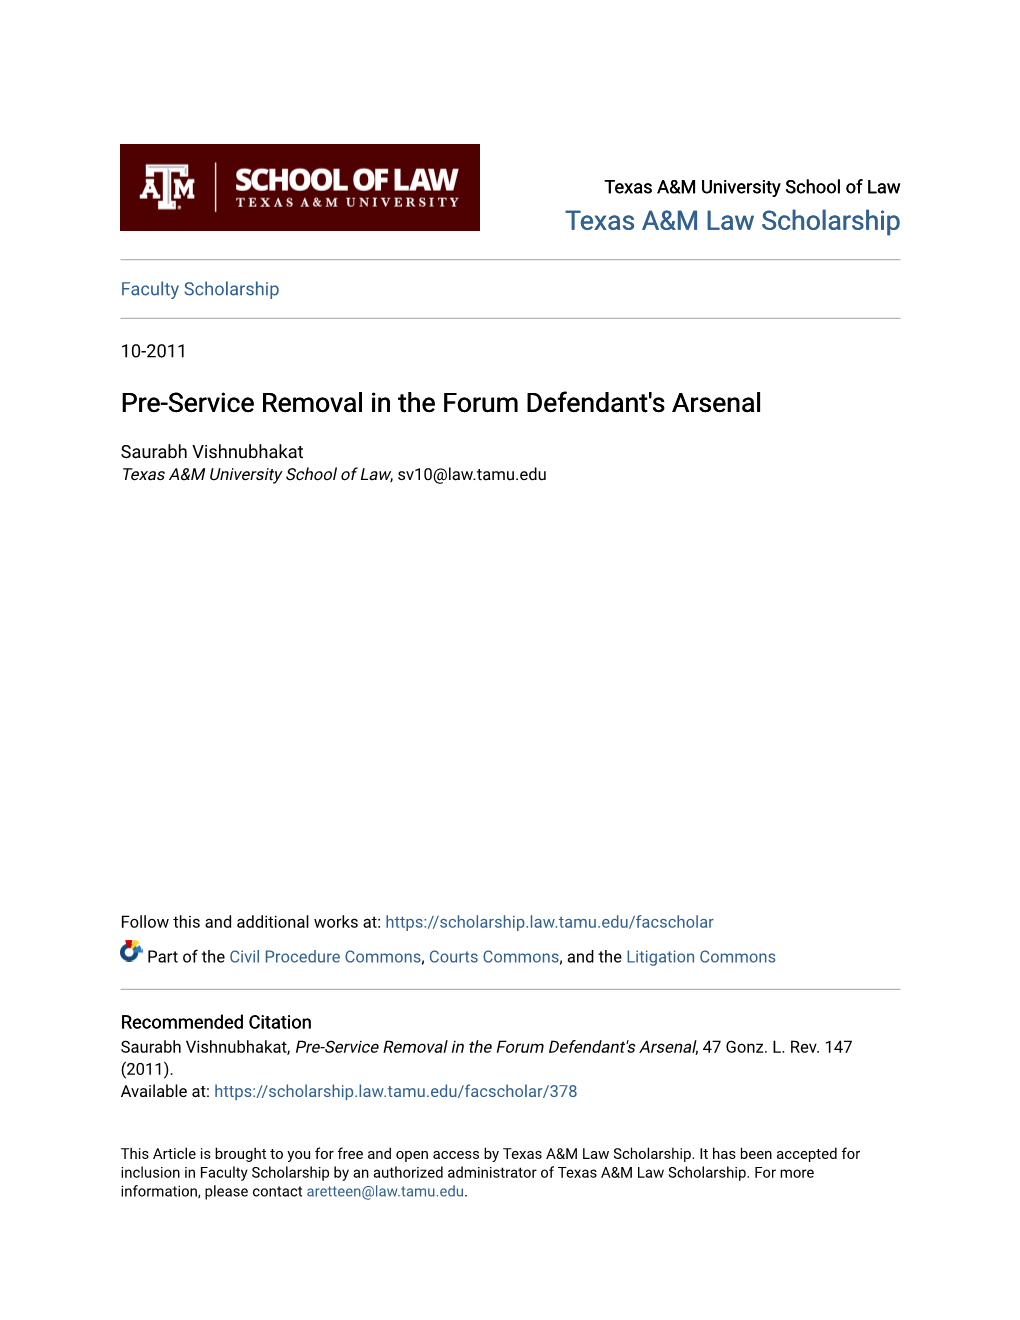 Pre-Service Removal in the Forum Defendant's Arsenal